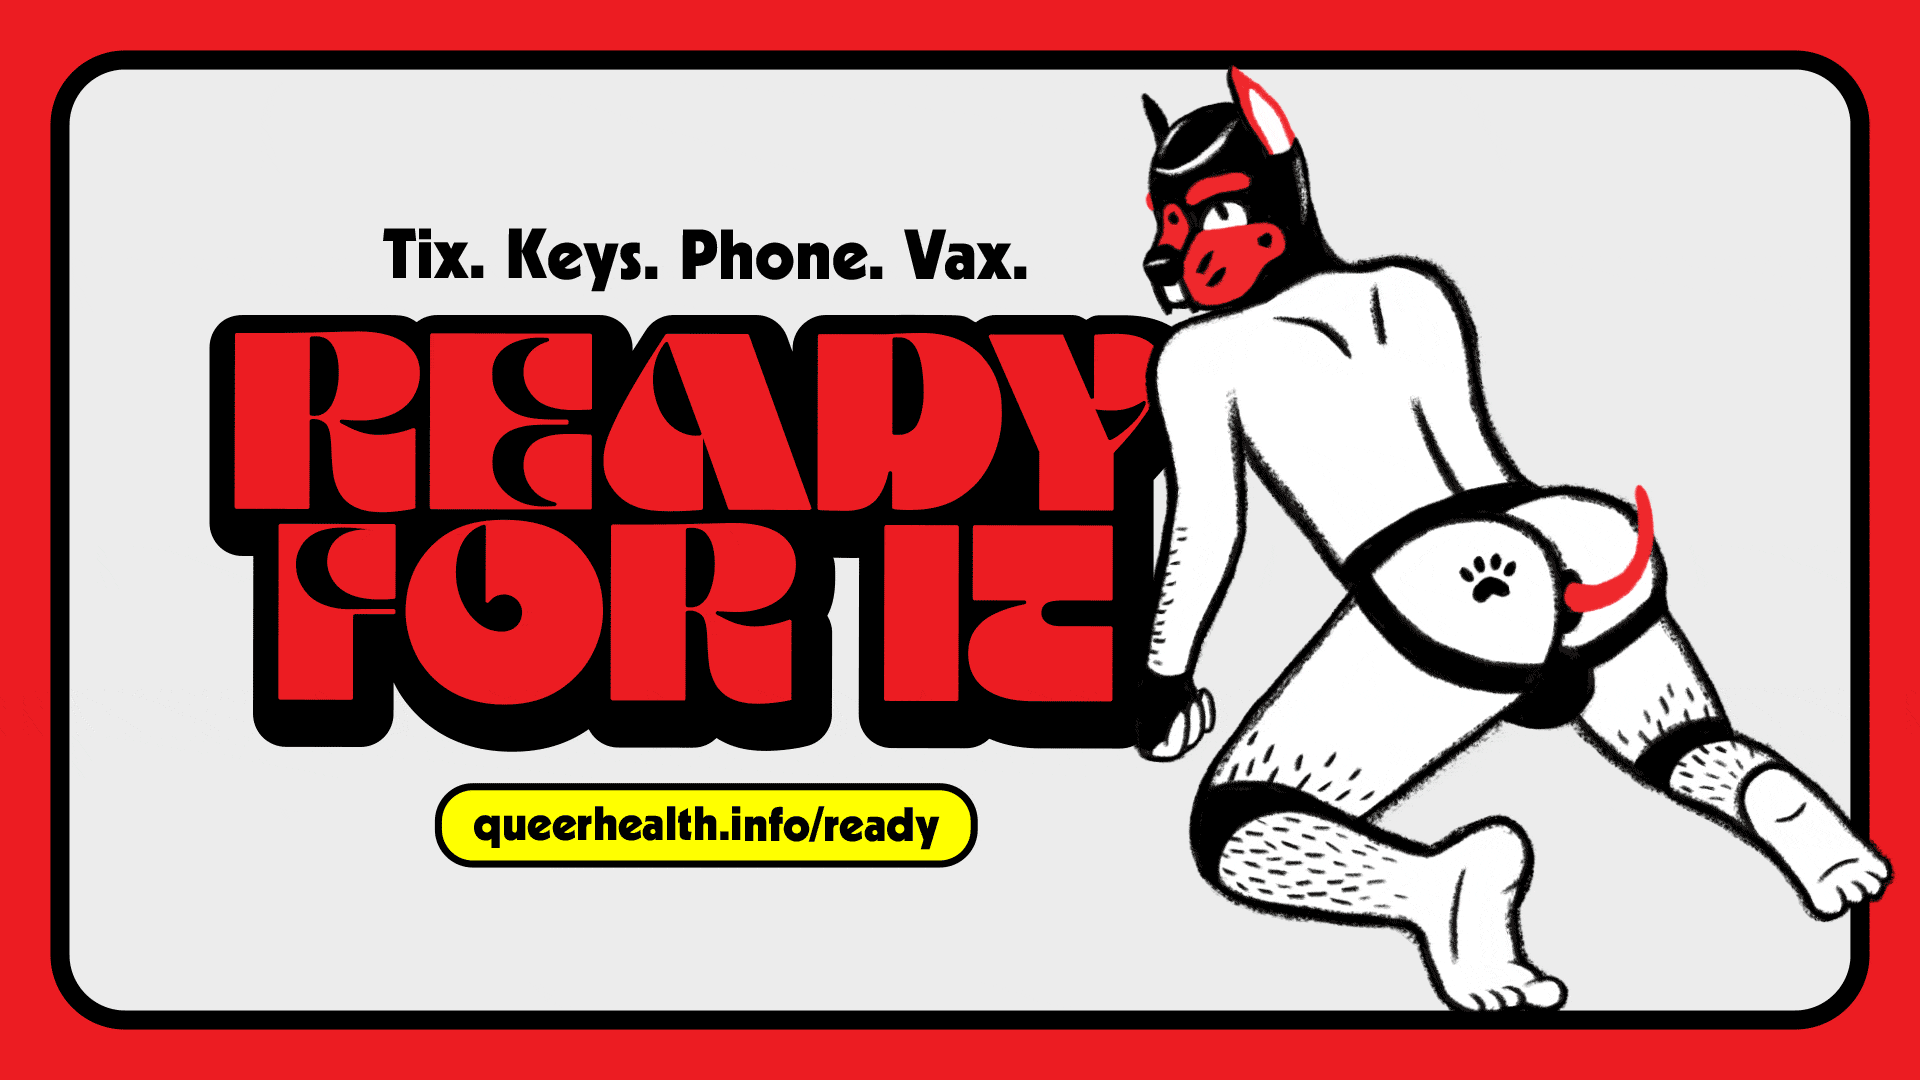 “READY FOR IT: Tix. Keys. Phone. Vax.” animation series 10